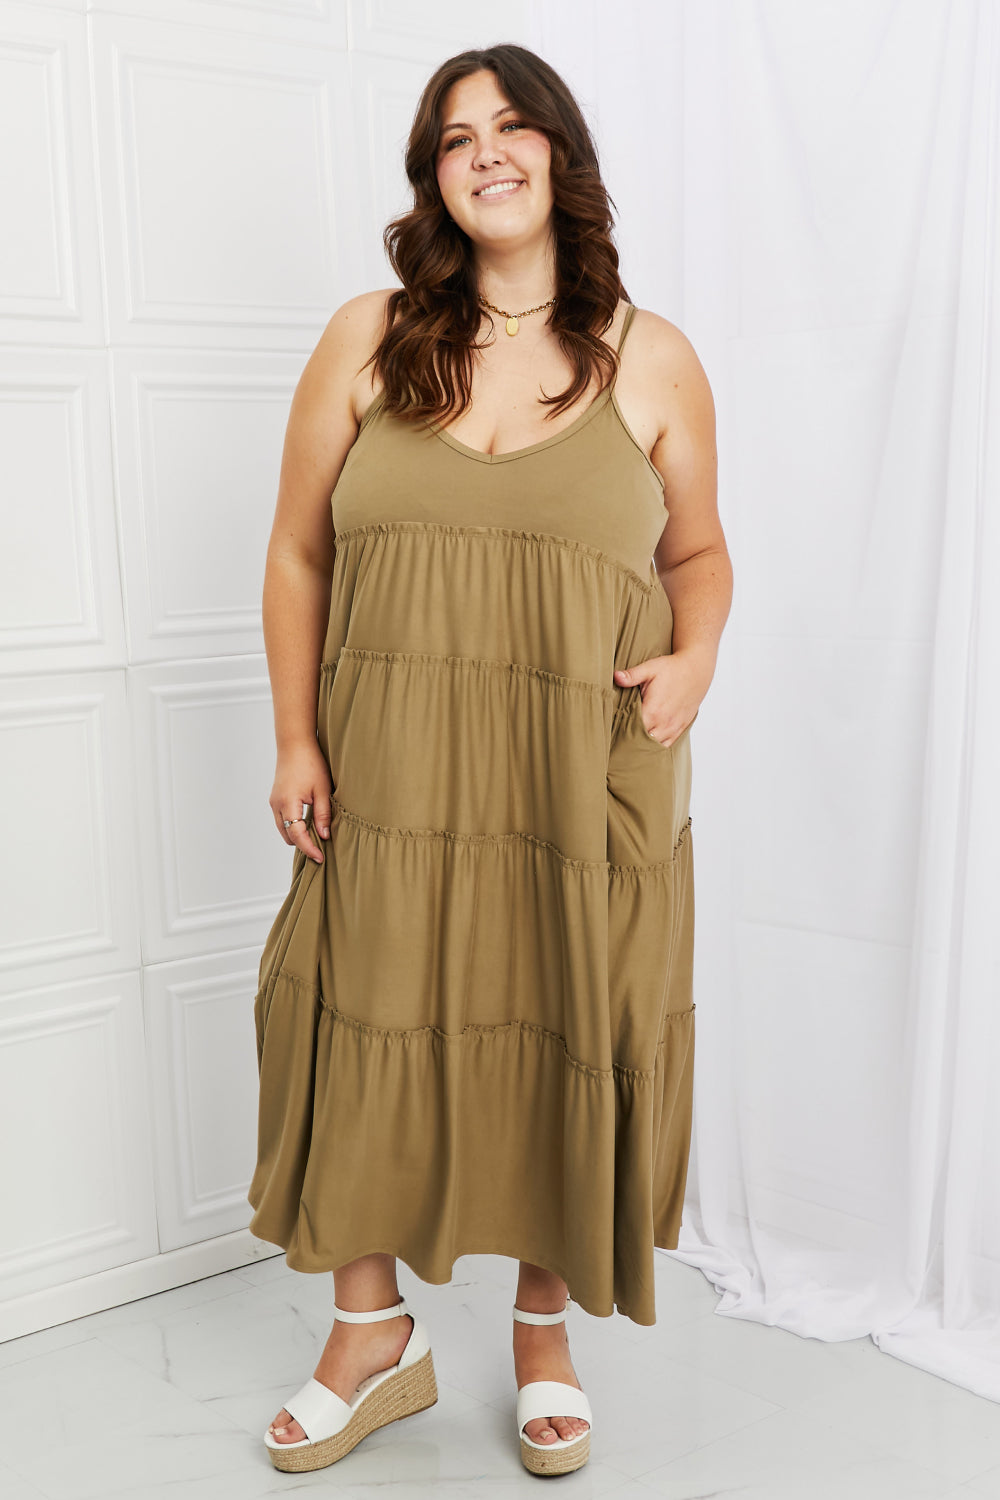 Zenana Full Size Spaghetti Strap Tiered Dress with Pockets in Khaki Print on any thing USA/STOD clothes